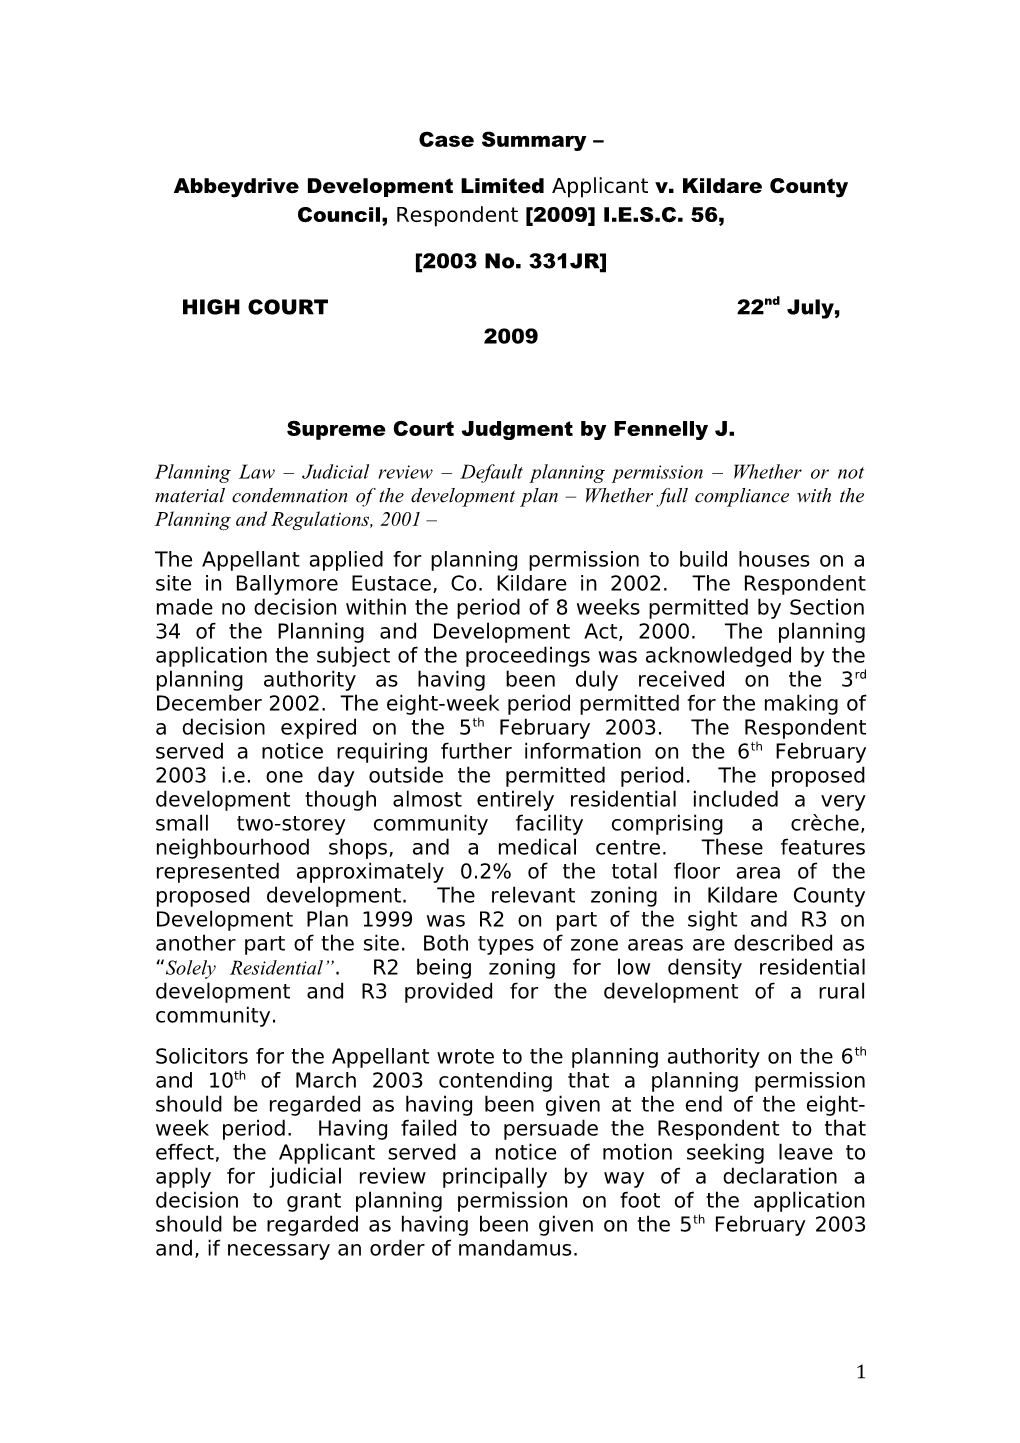 Abbeydrive Development Limited Applicant V. Kildare County Council, Respondent 2009 I.E.S.C